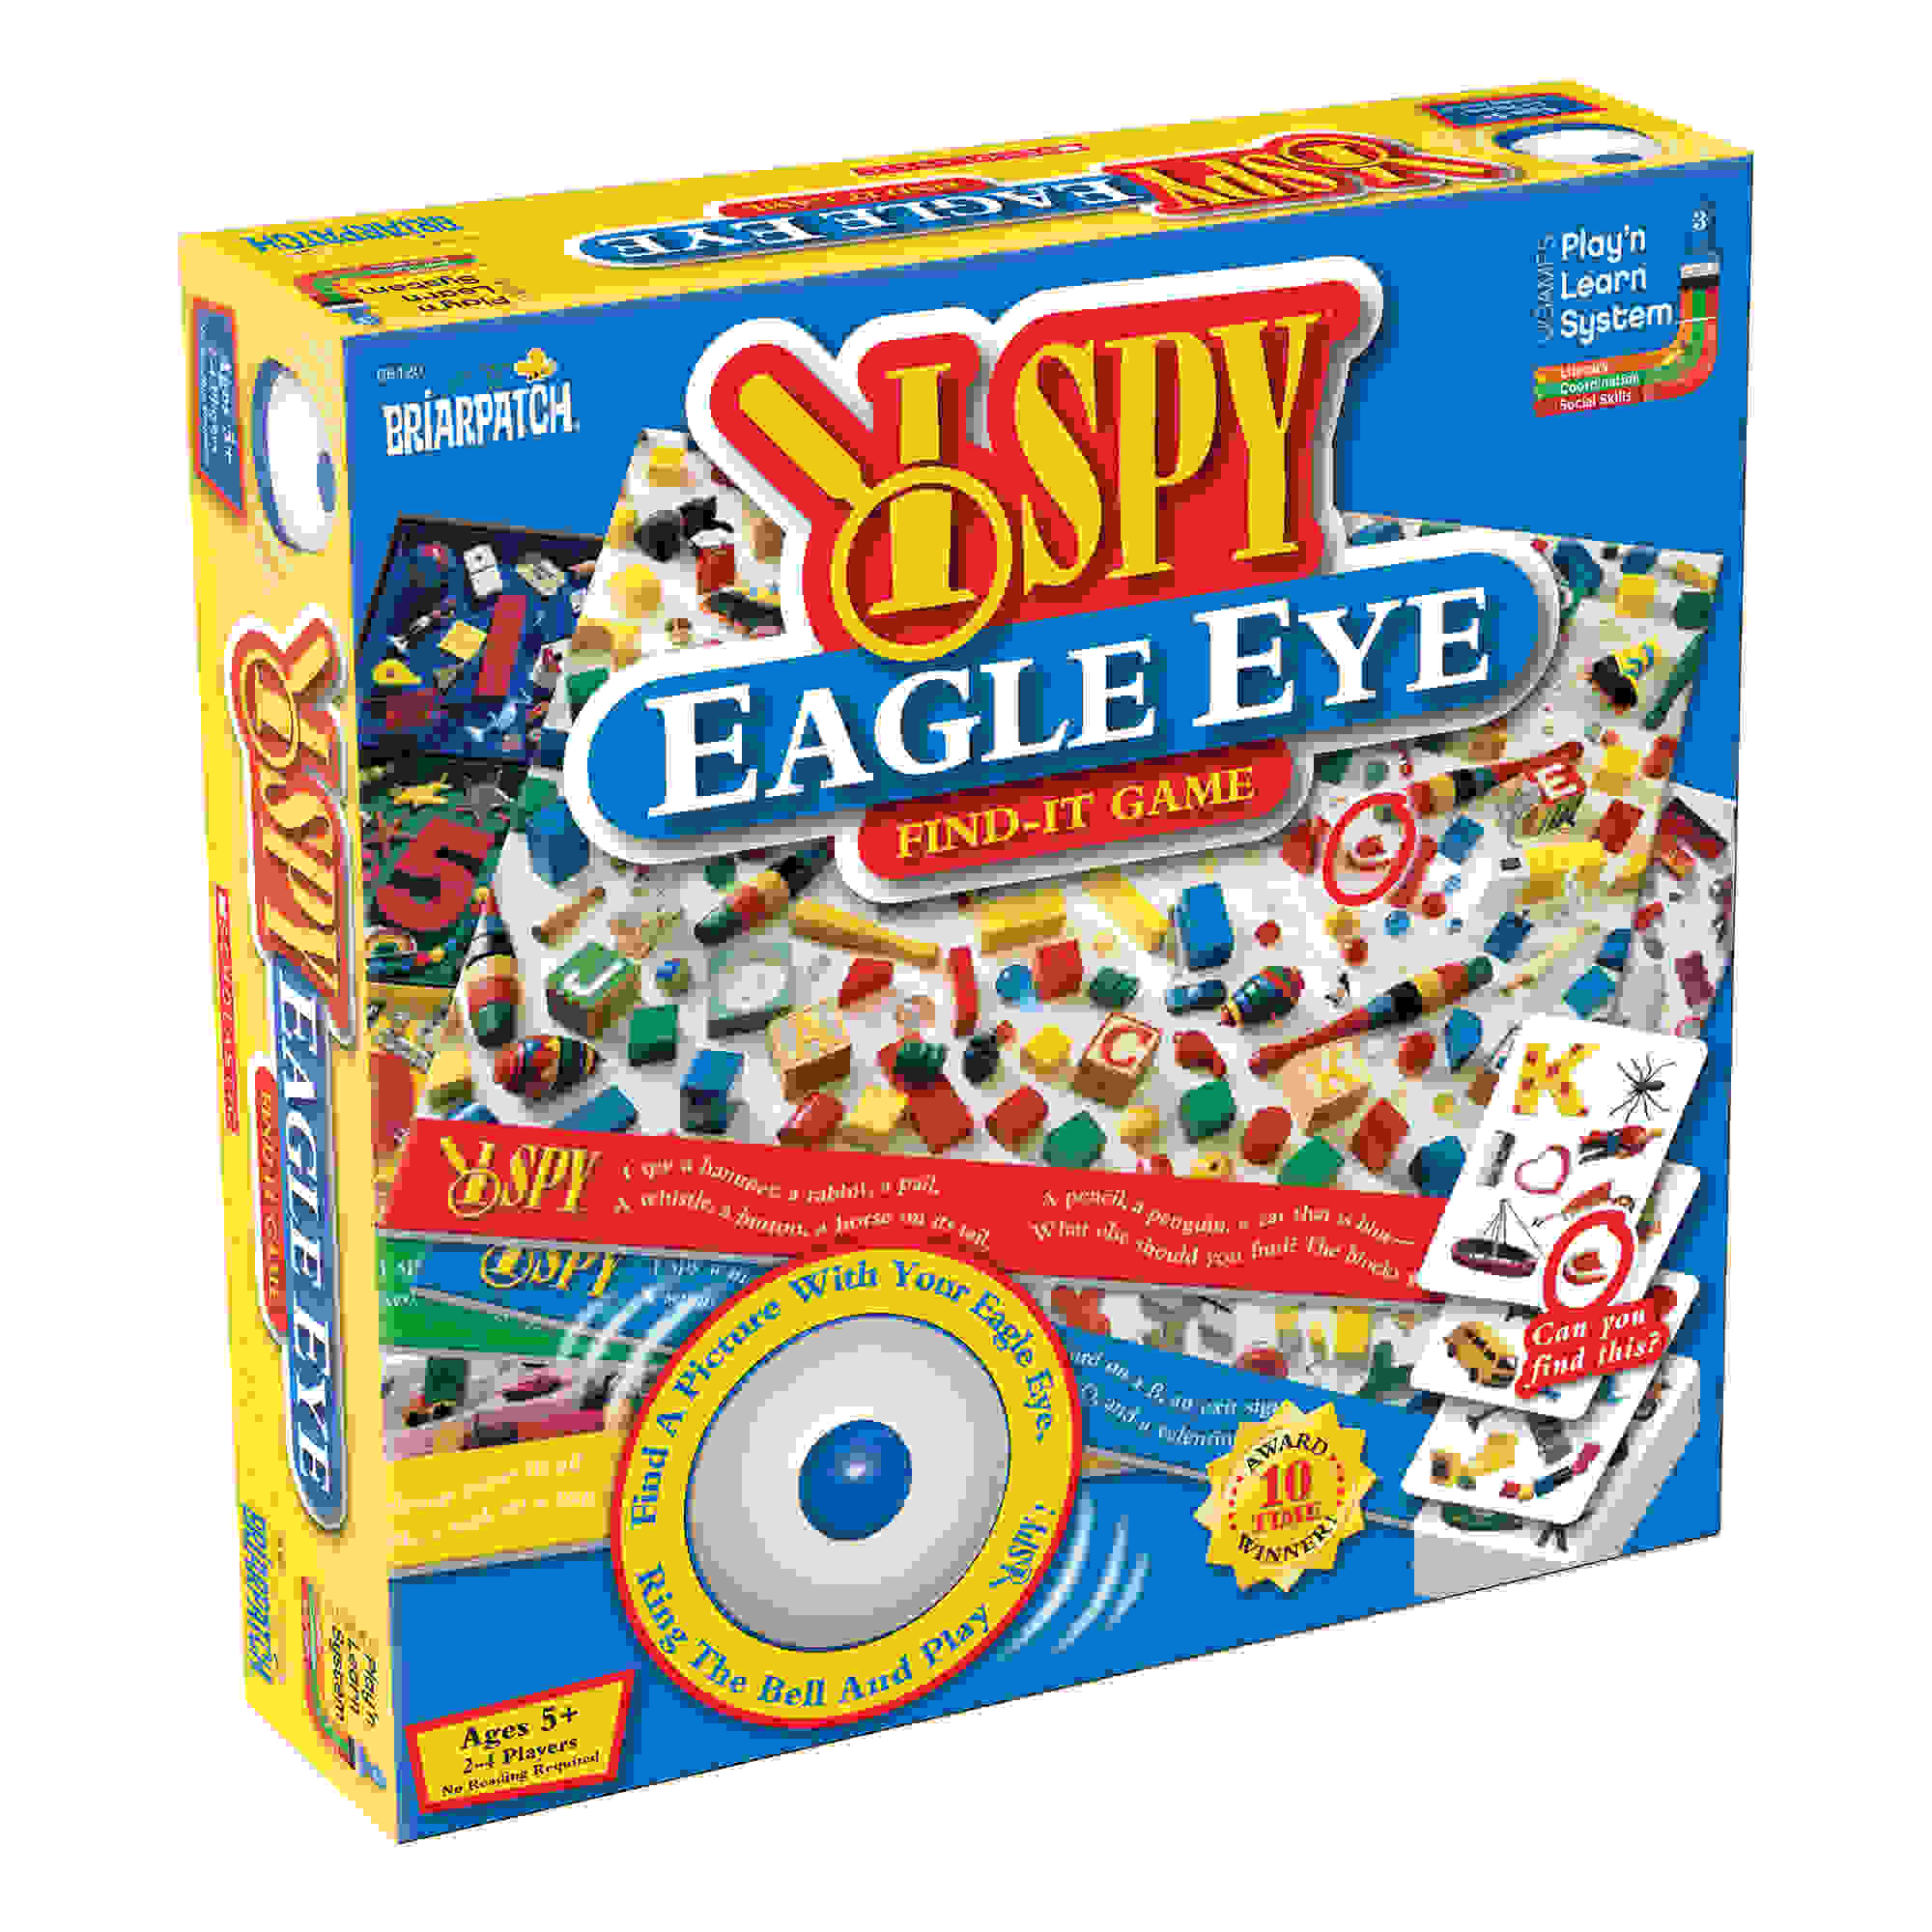 I Spy Eagle Eye Find-It Game